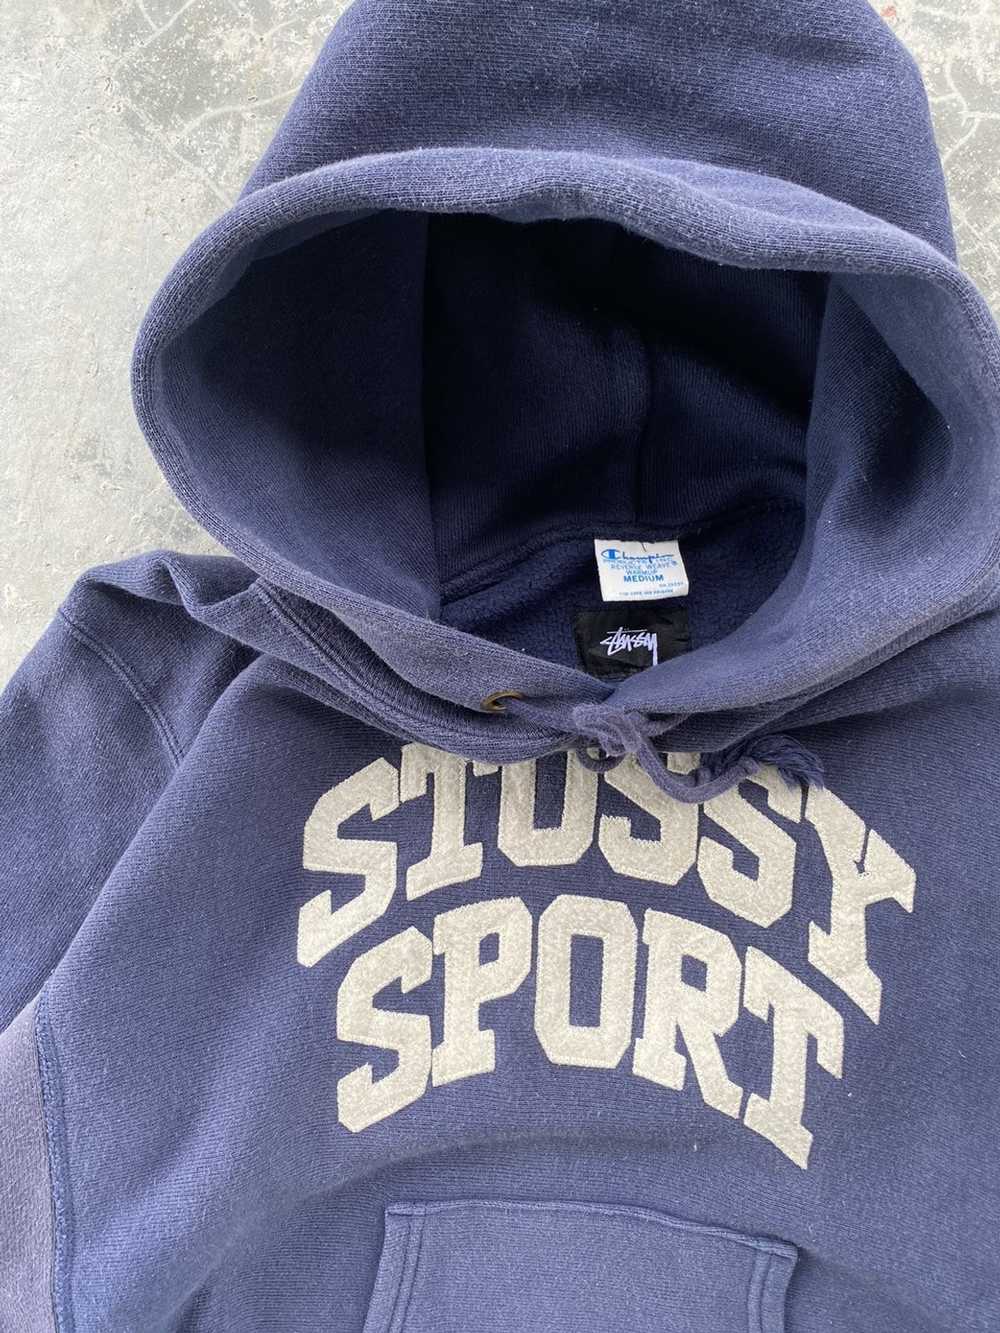 Stussy 2016 Stussy x Champion - image 4